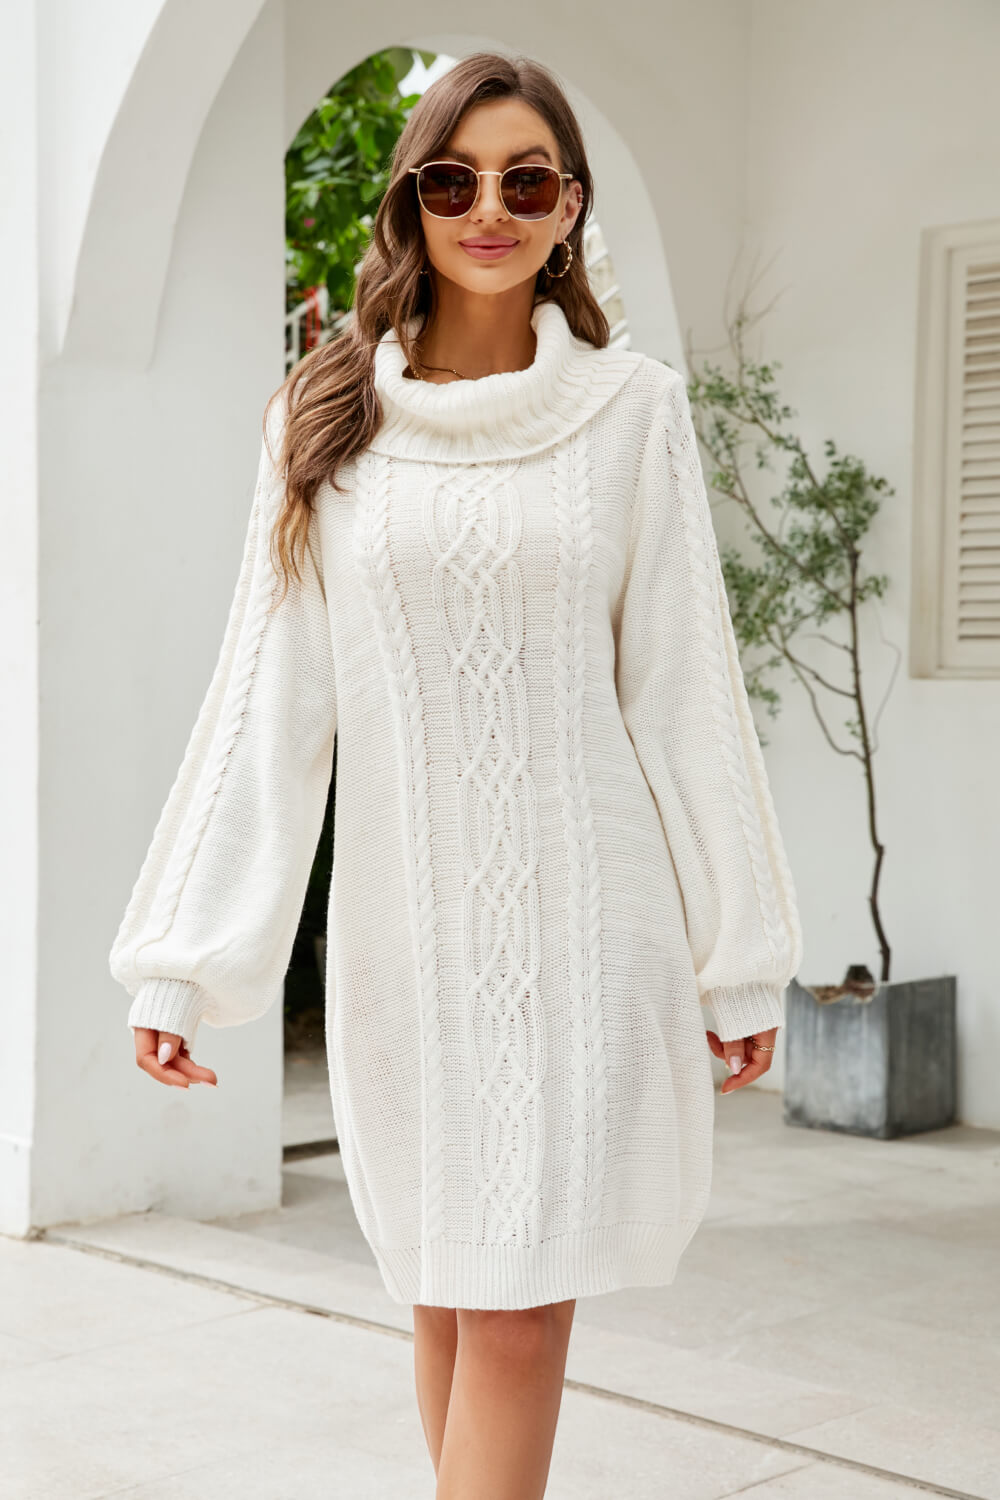 Mixed Knit Turtleneck Lantern Sleeve Sweater Dress  | KIKI COUTURE-Women's Clothing, Designer Fashions, Shoes, Bags